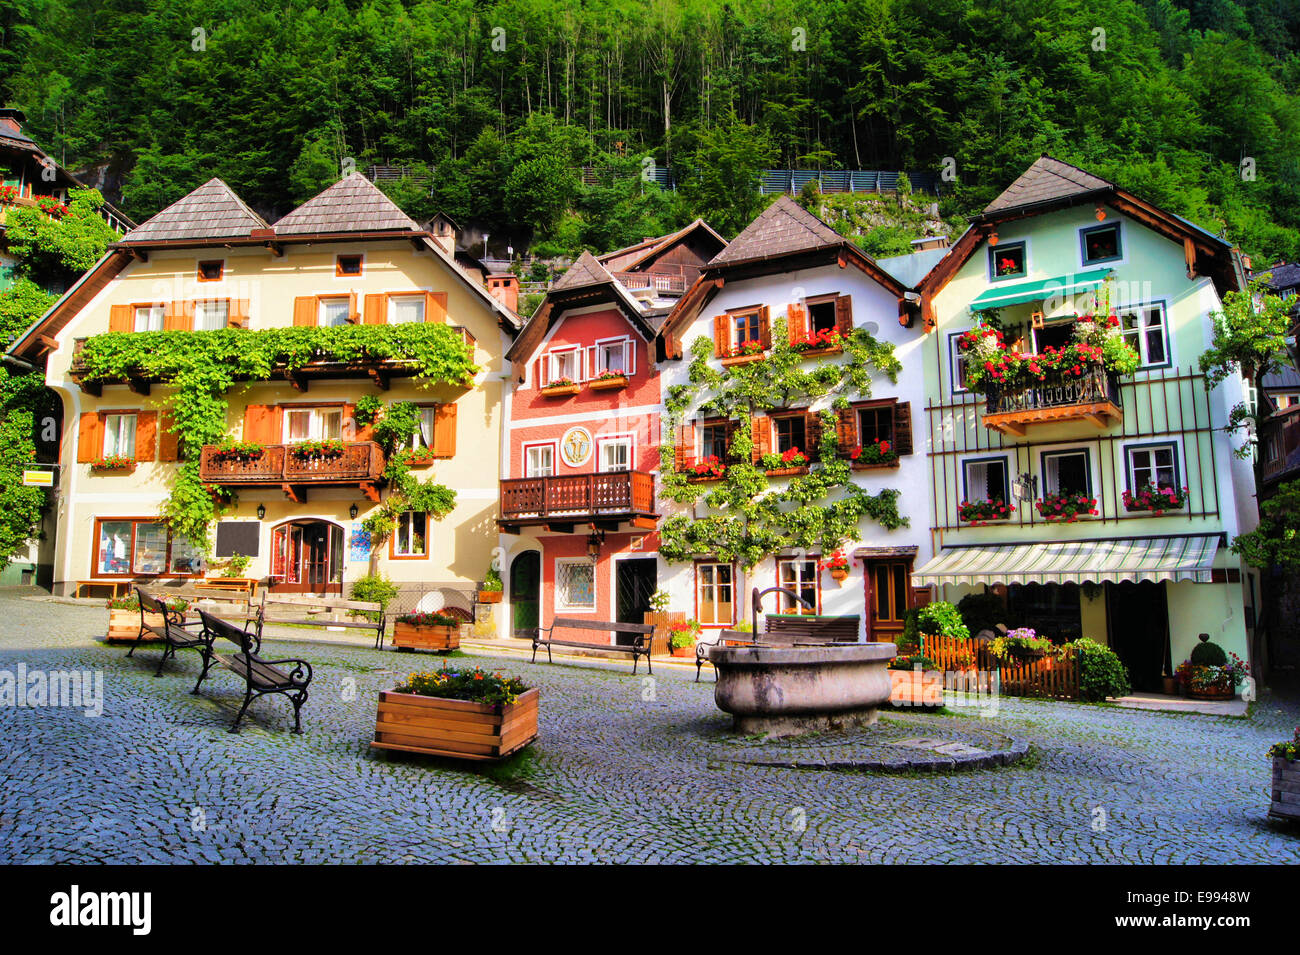 Colorful and picturesque village square in Hallstatt, Austria Stock Photo